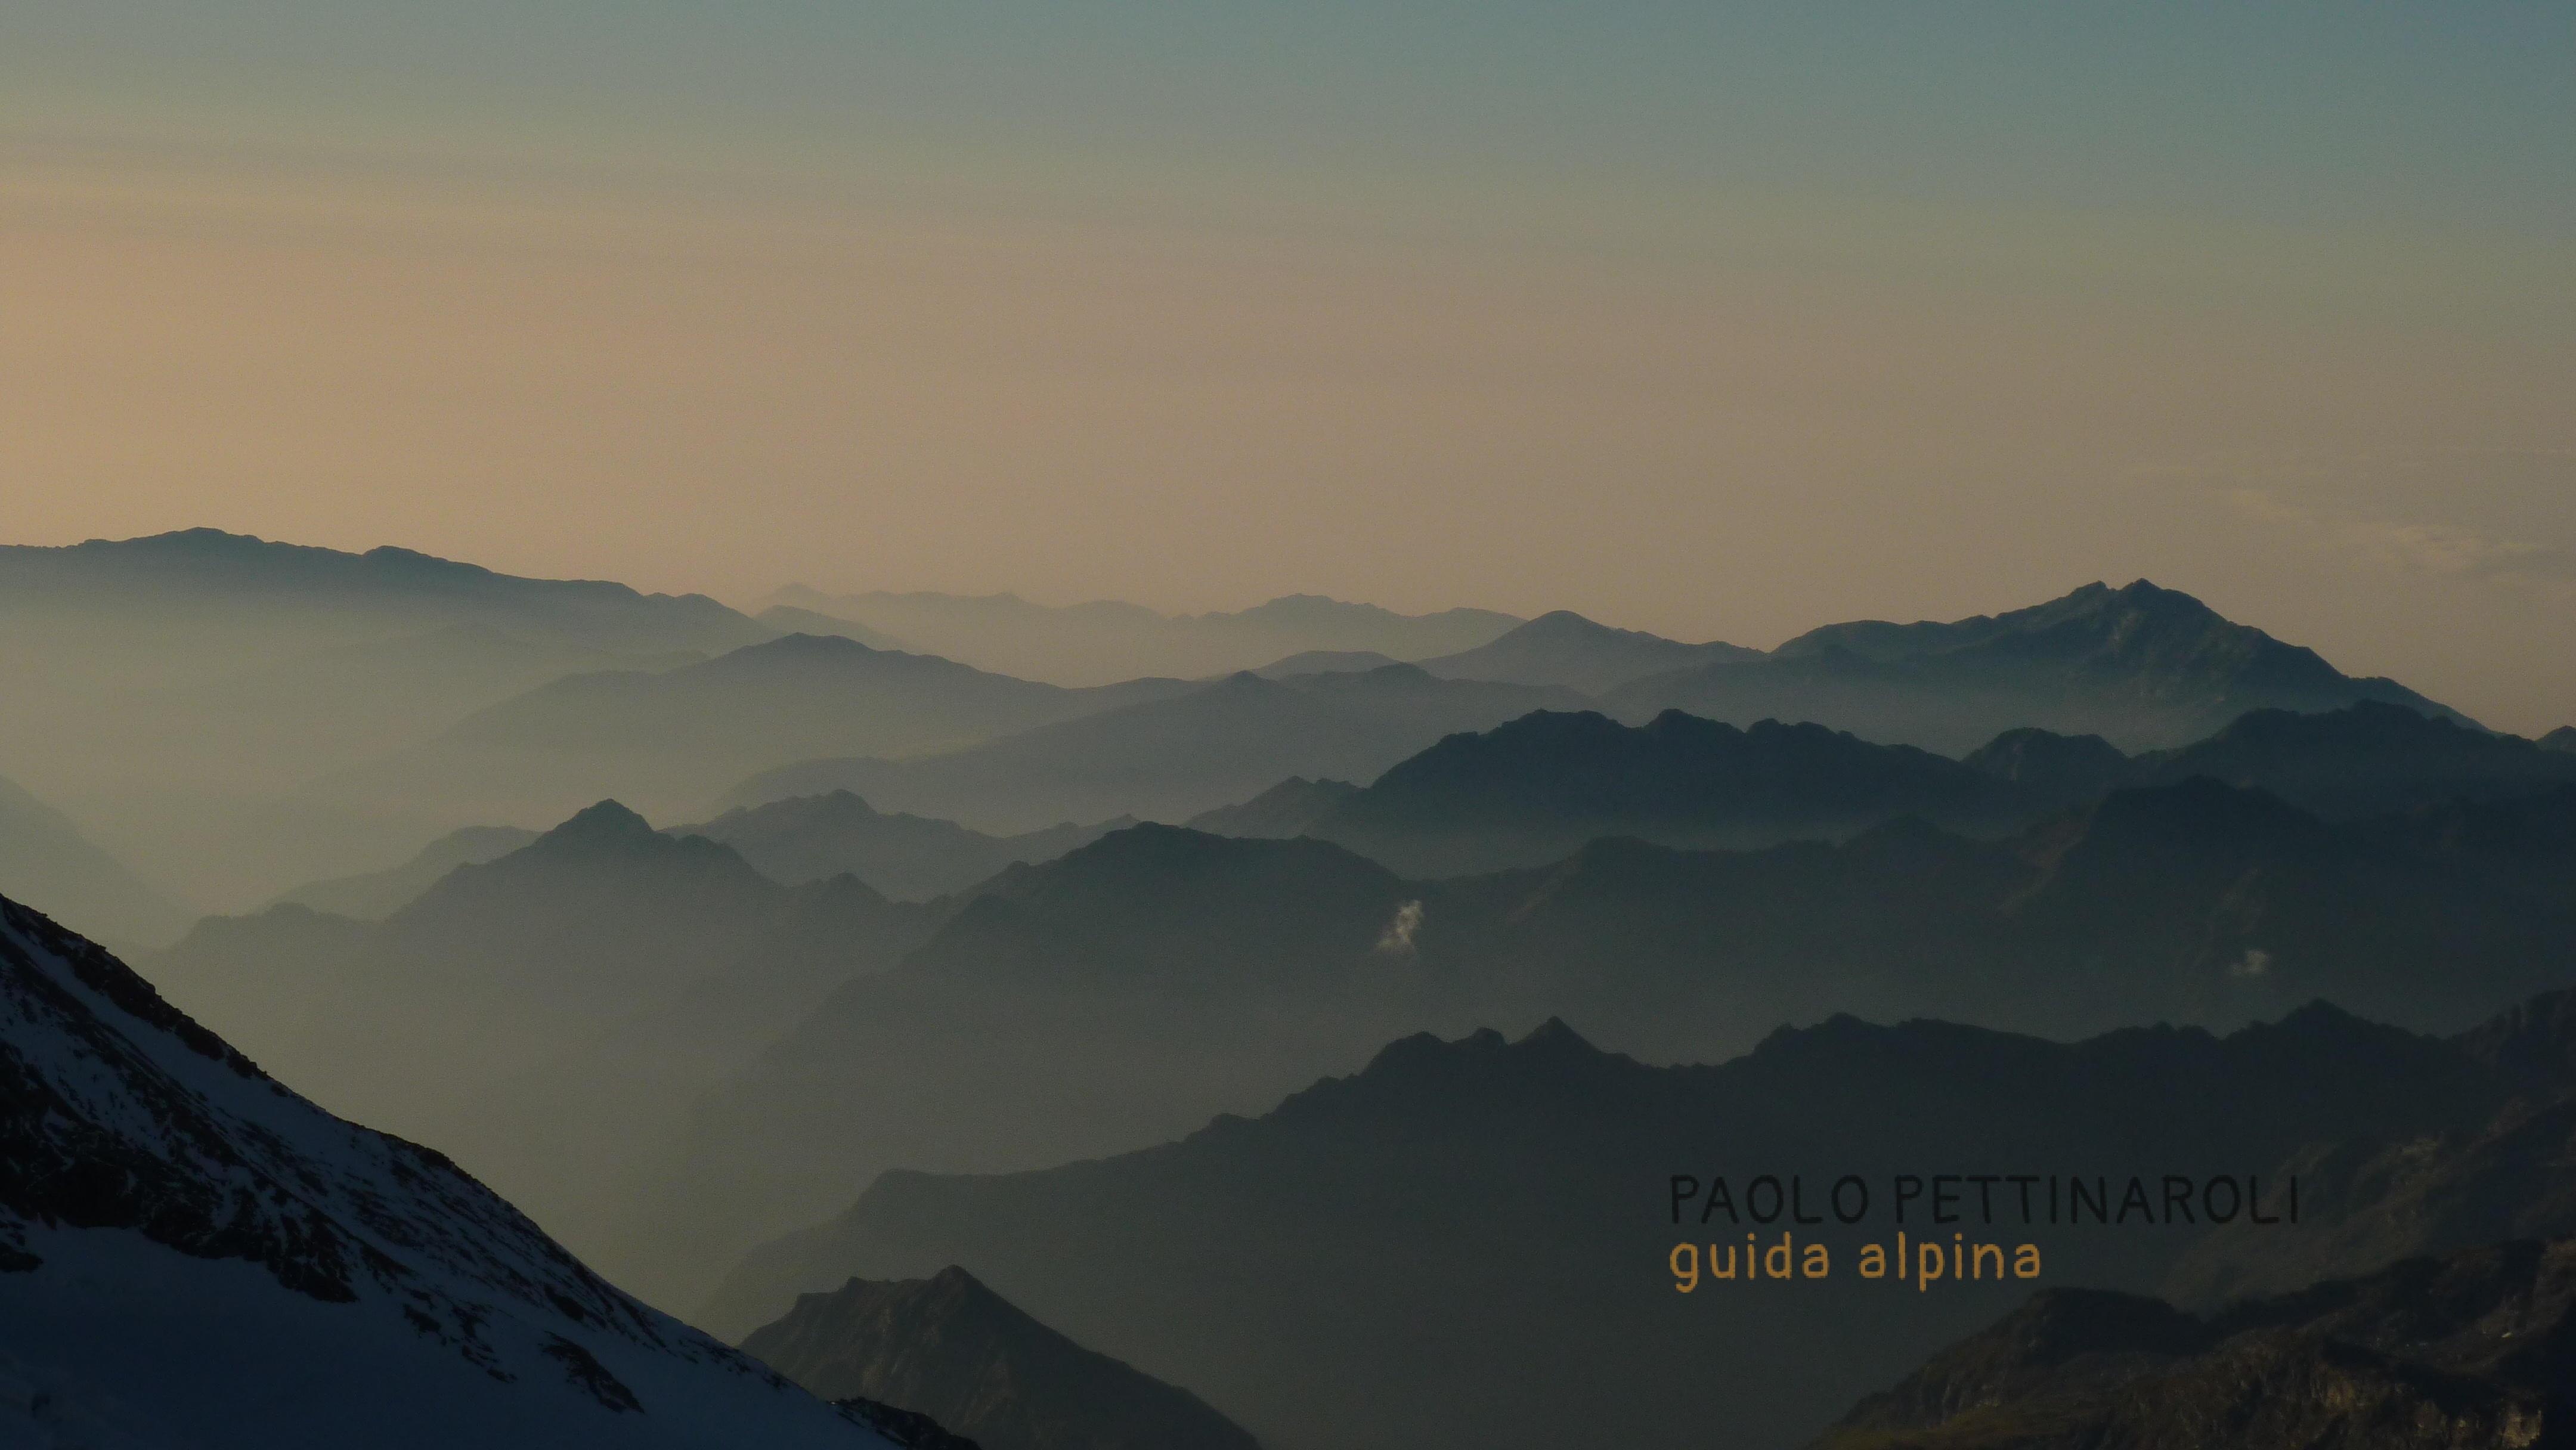 panorami - paolo pettinaroli guida alpina